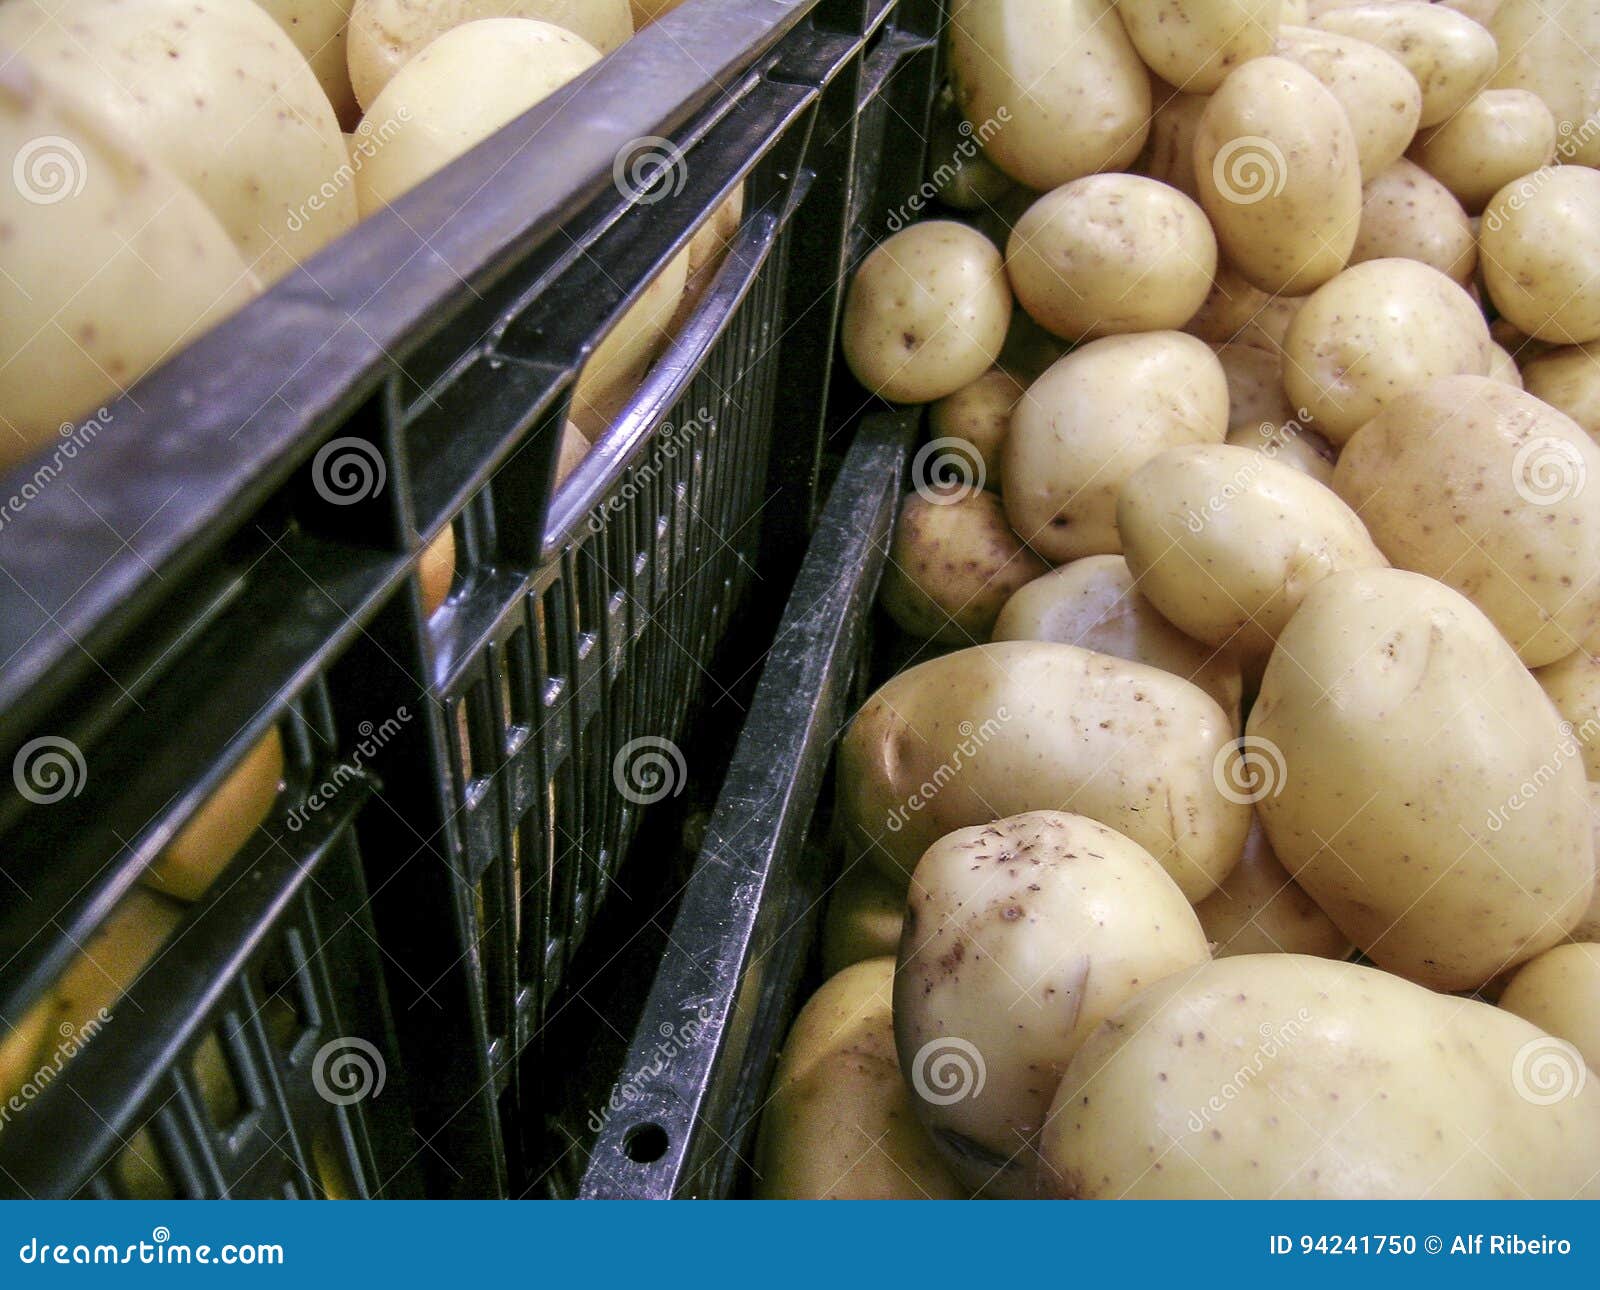 potato stall